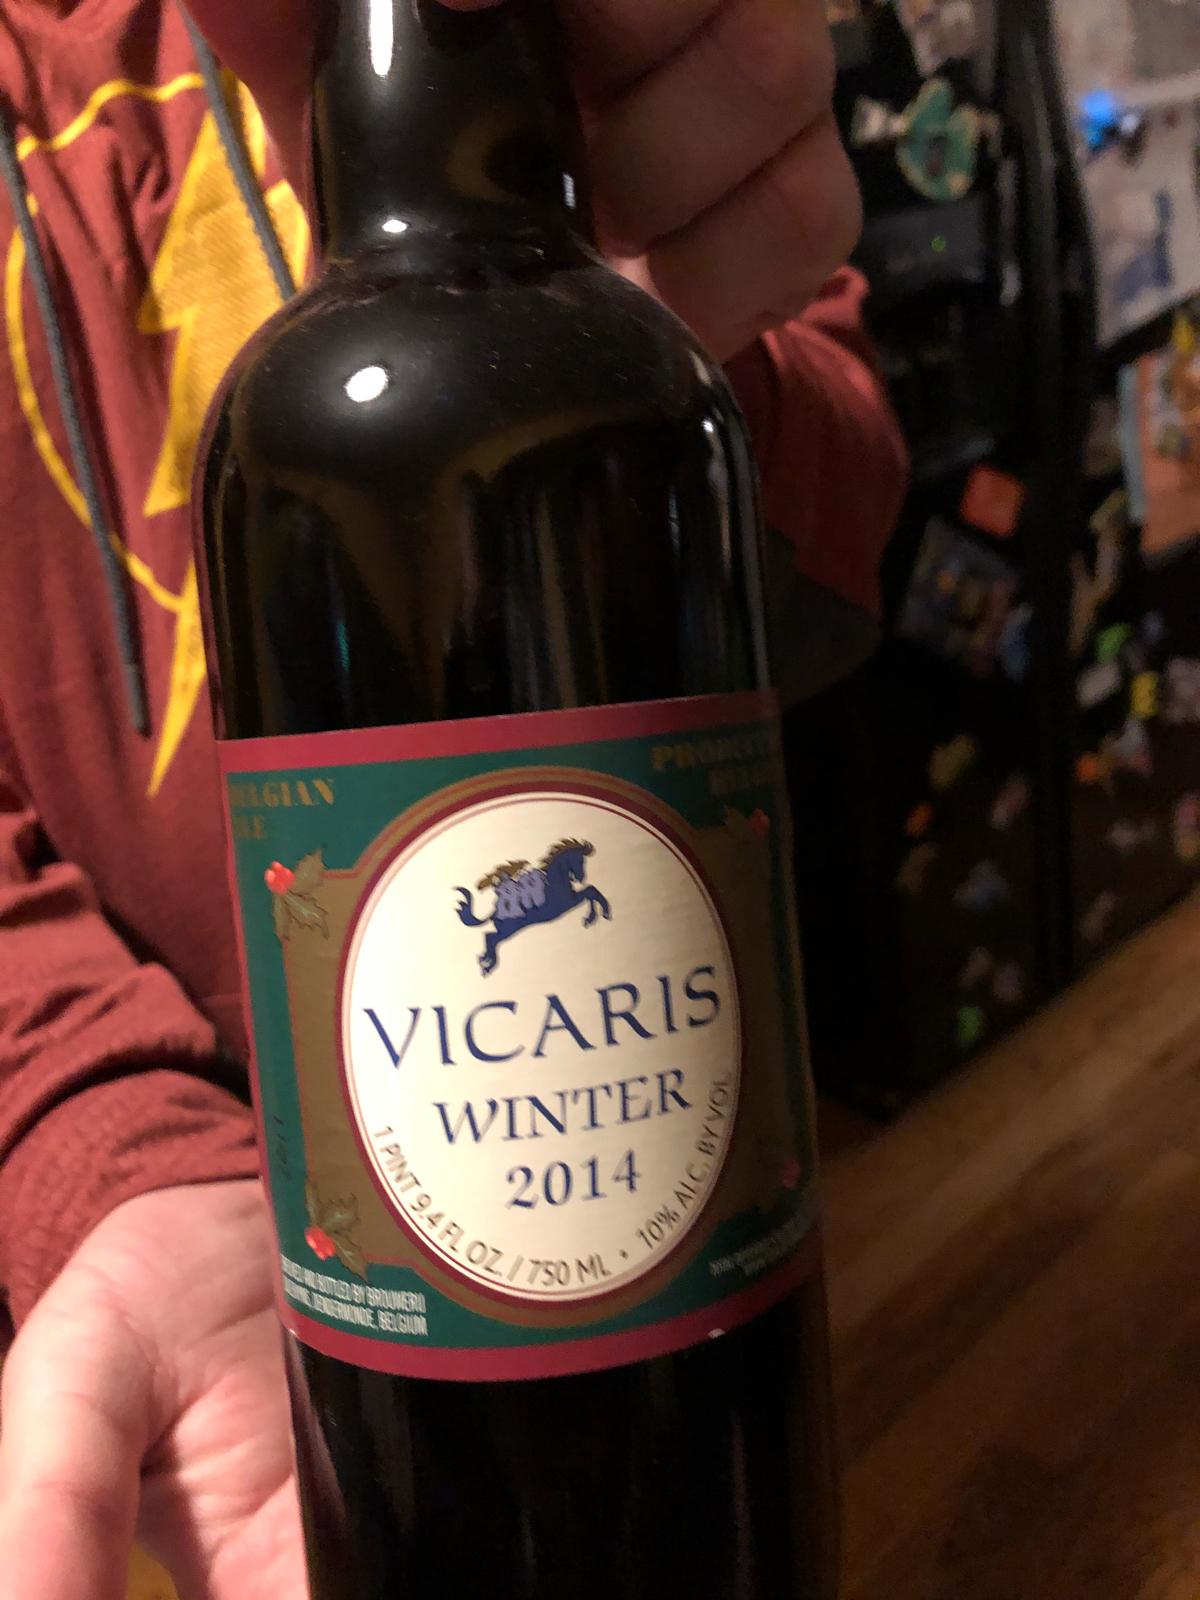 Vicaris Winter (2014)